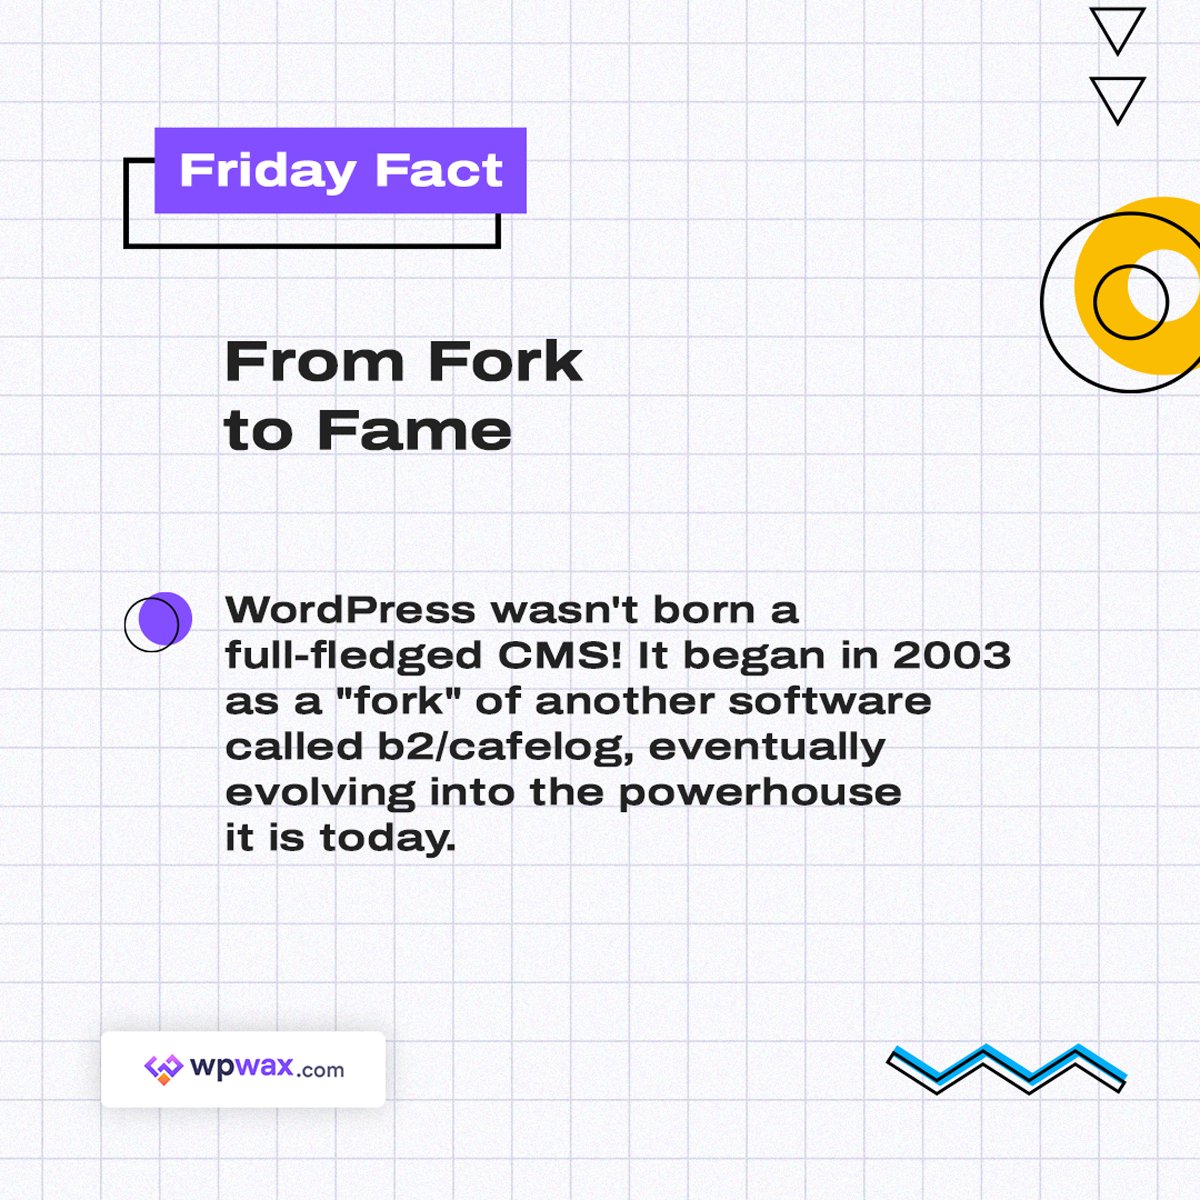 From small beginnings to global dominance: the WordPress story!
#wordpress #cms #factoftheday #fridayfact  #techtrivia #wordpressfacts